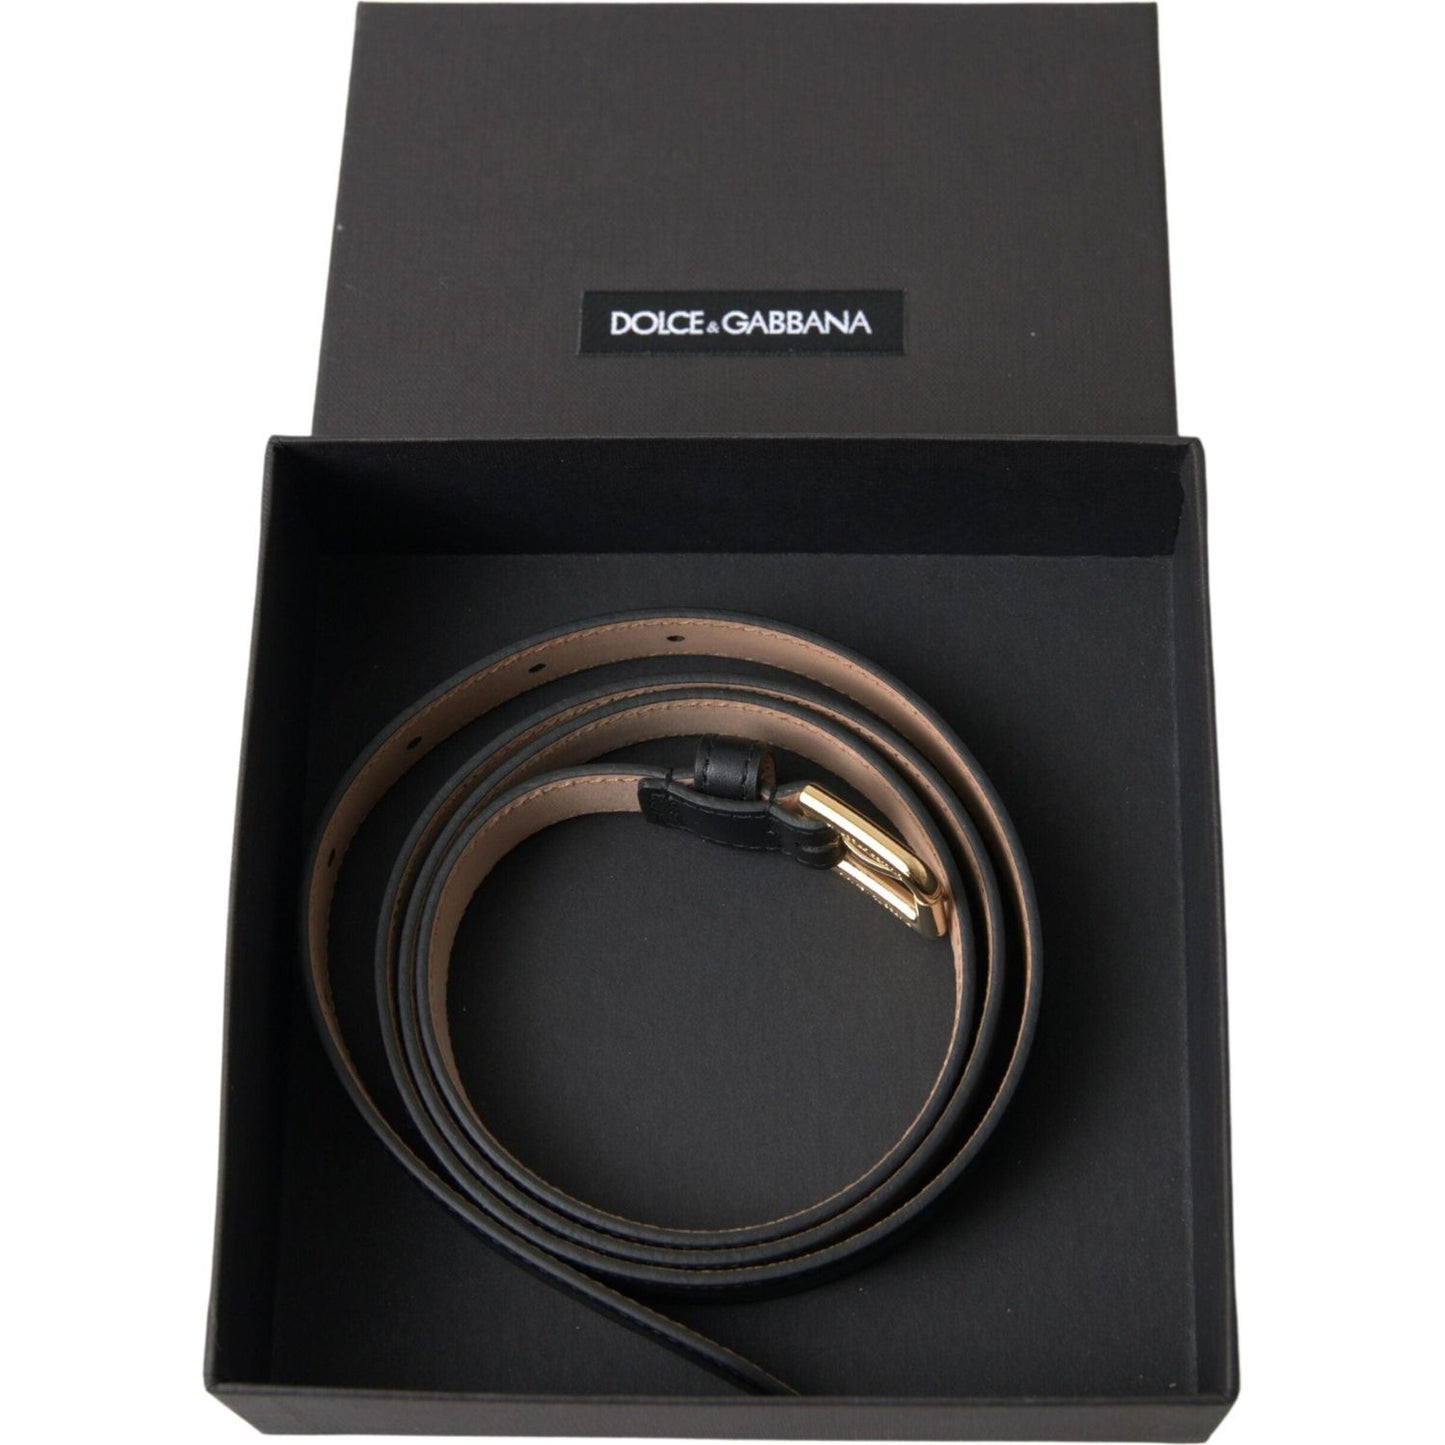 Dolce & Gabbana Elegant Italian Leather Belt with Metal Buckle black-leather-gold-tone-metal-buckle-belt 465A1106-scaled-220bddfd-db0.jpg